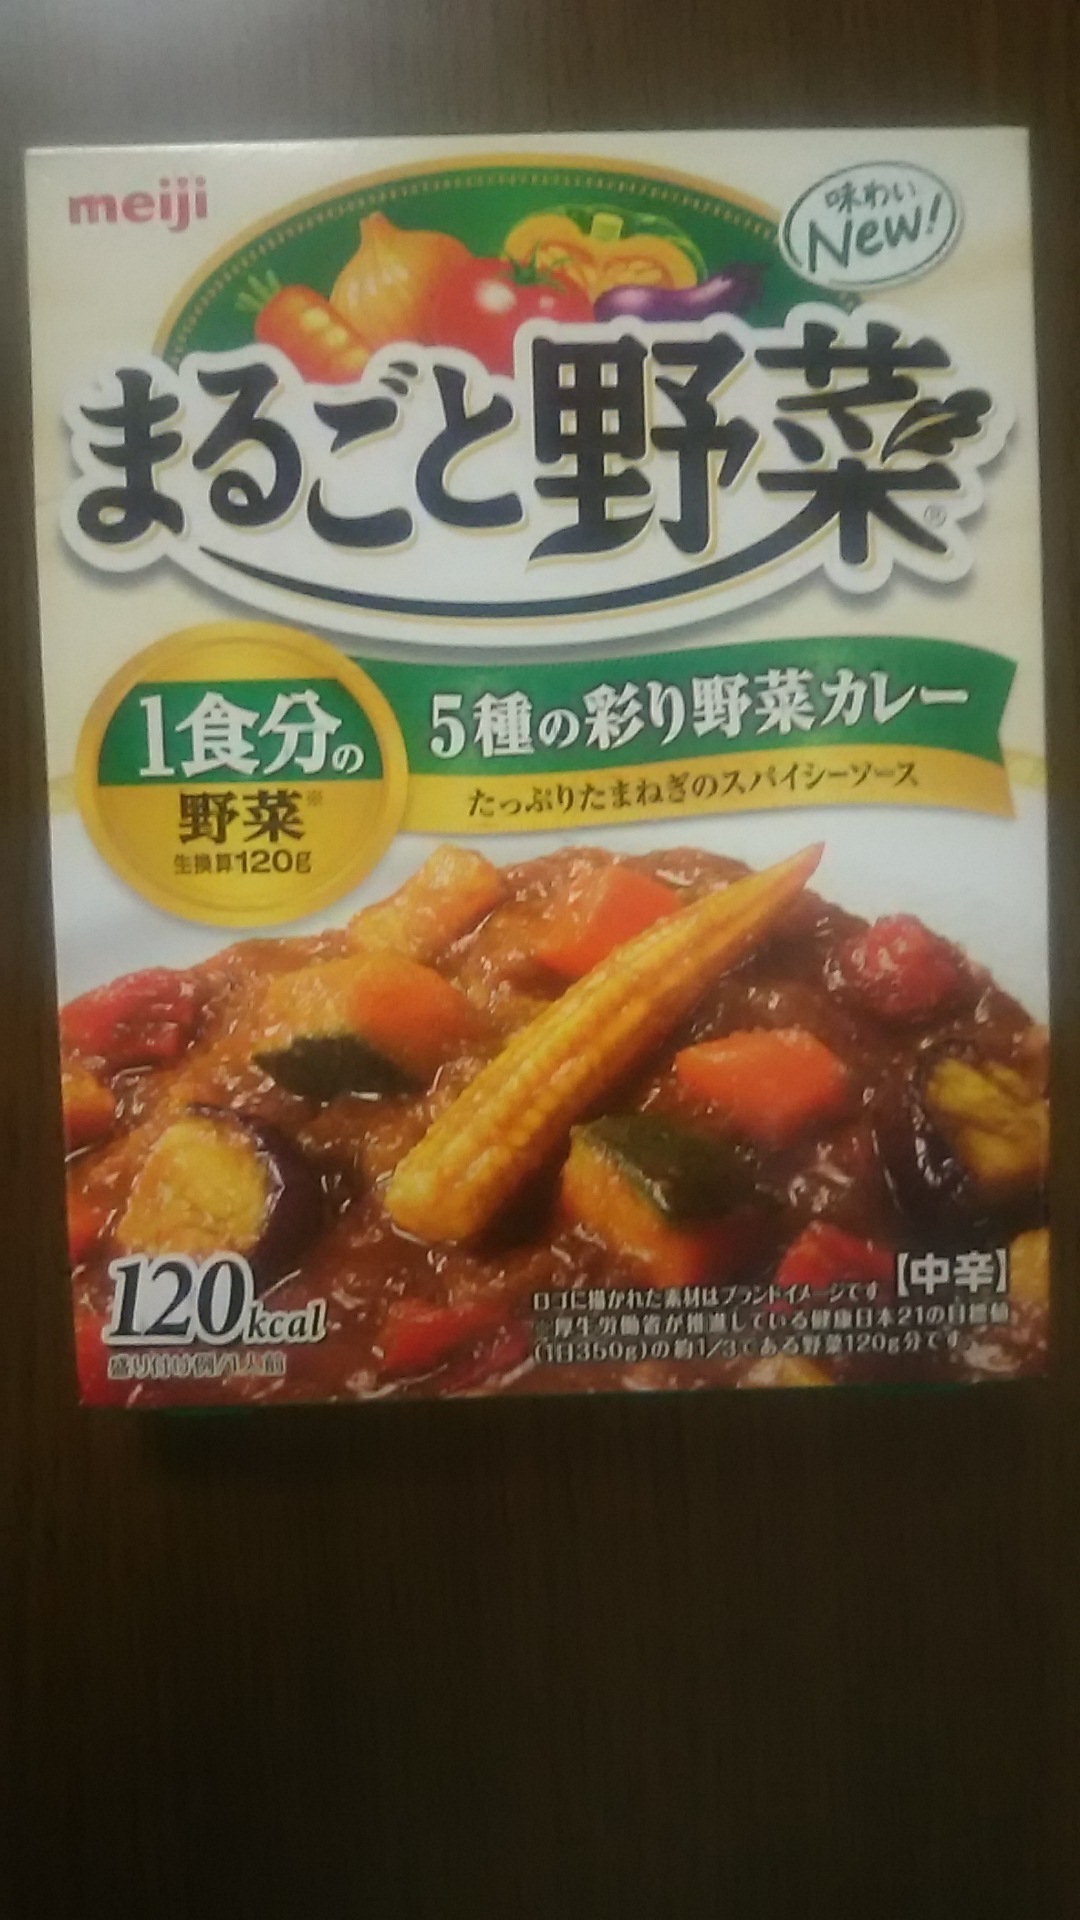 meiji まるごと野菜 5種の彩り野菜カレー: ご当地レトルトカレーで単身赴任の寂しい夕食